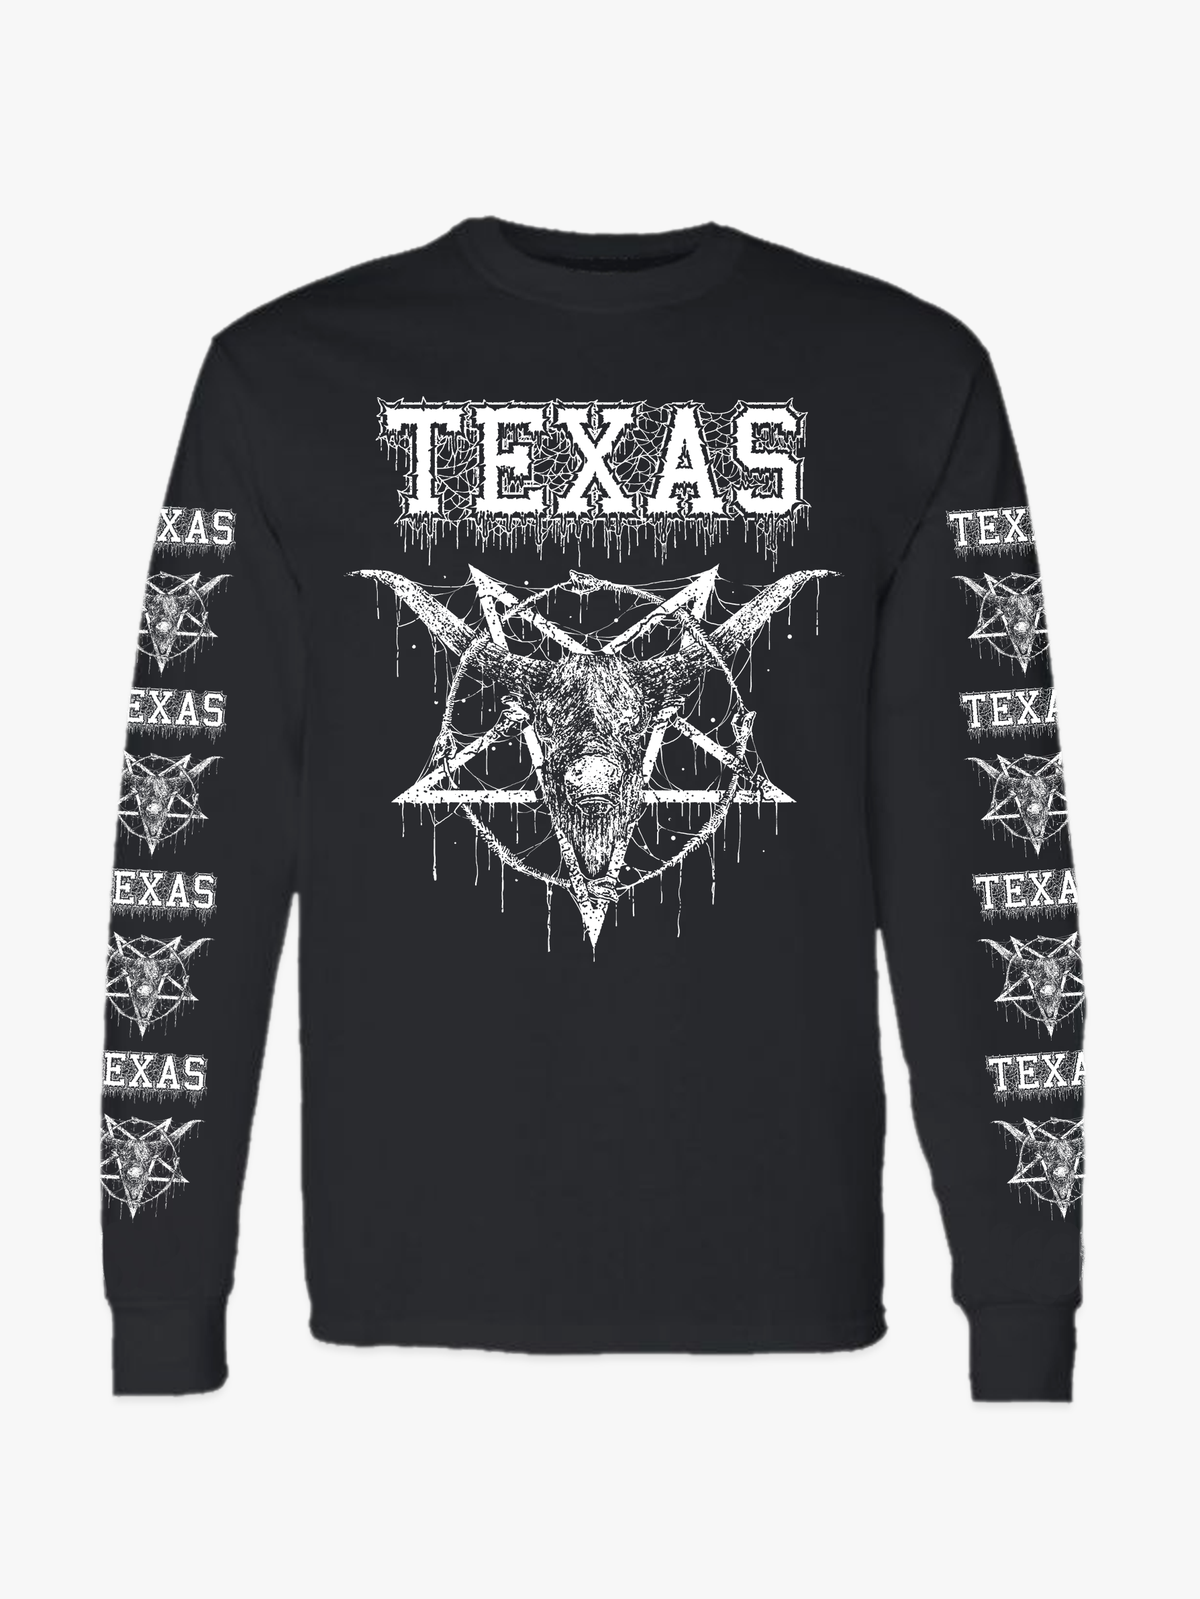 Spirit of Texas Shirt